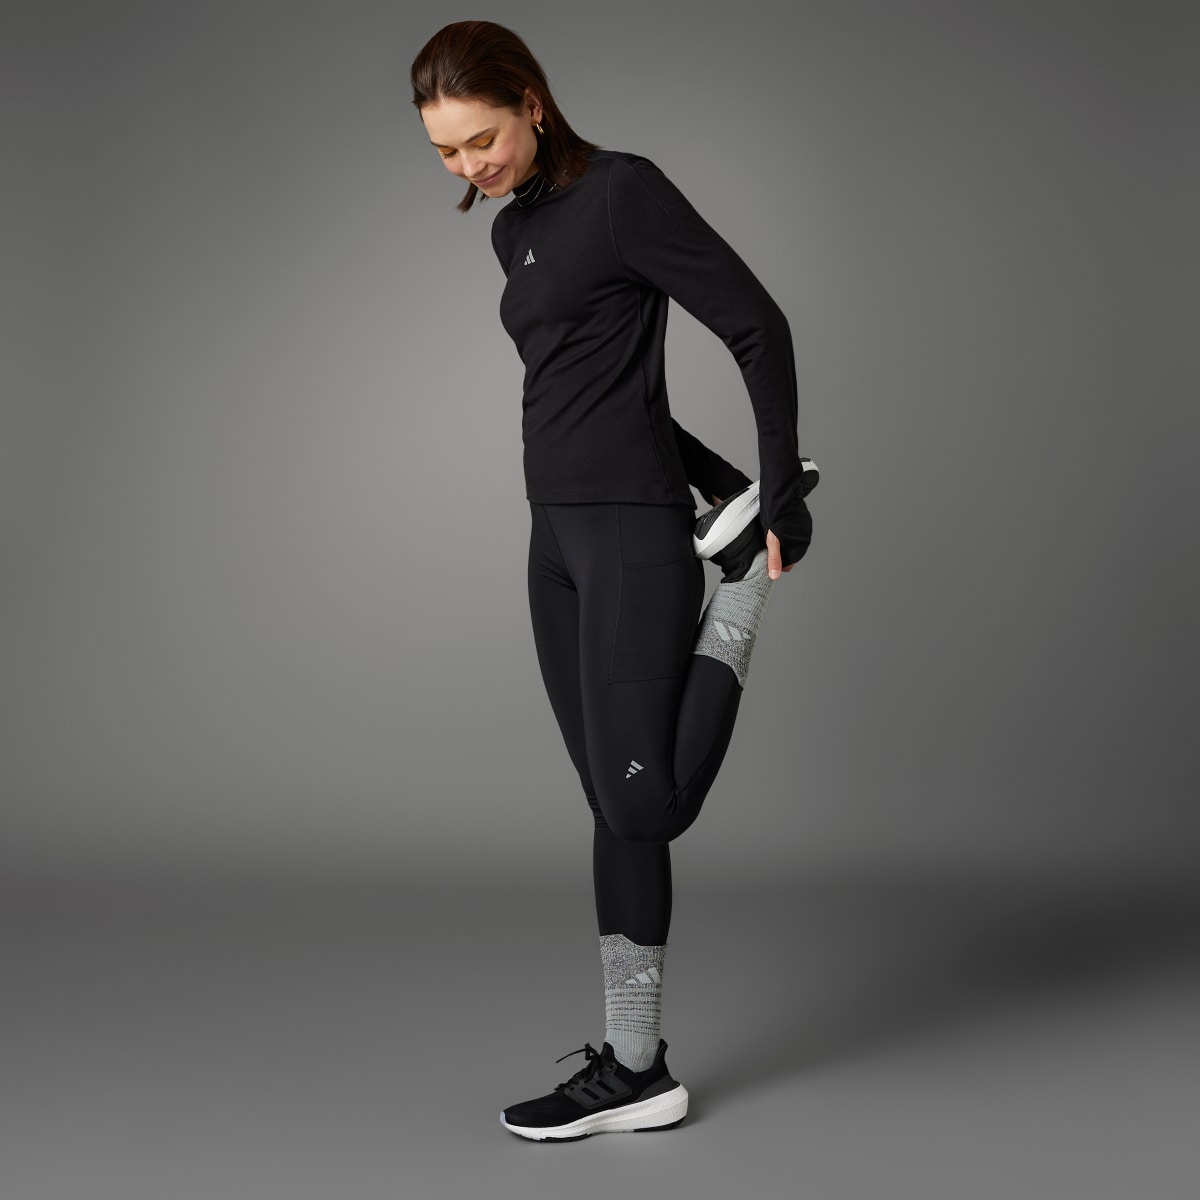 Adidas Koszulka Ultimate Running Conquer the Elements Merino Long Sleeve. 6